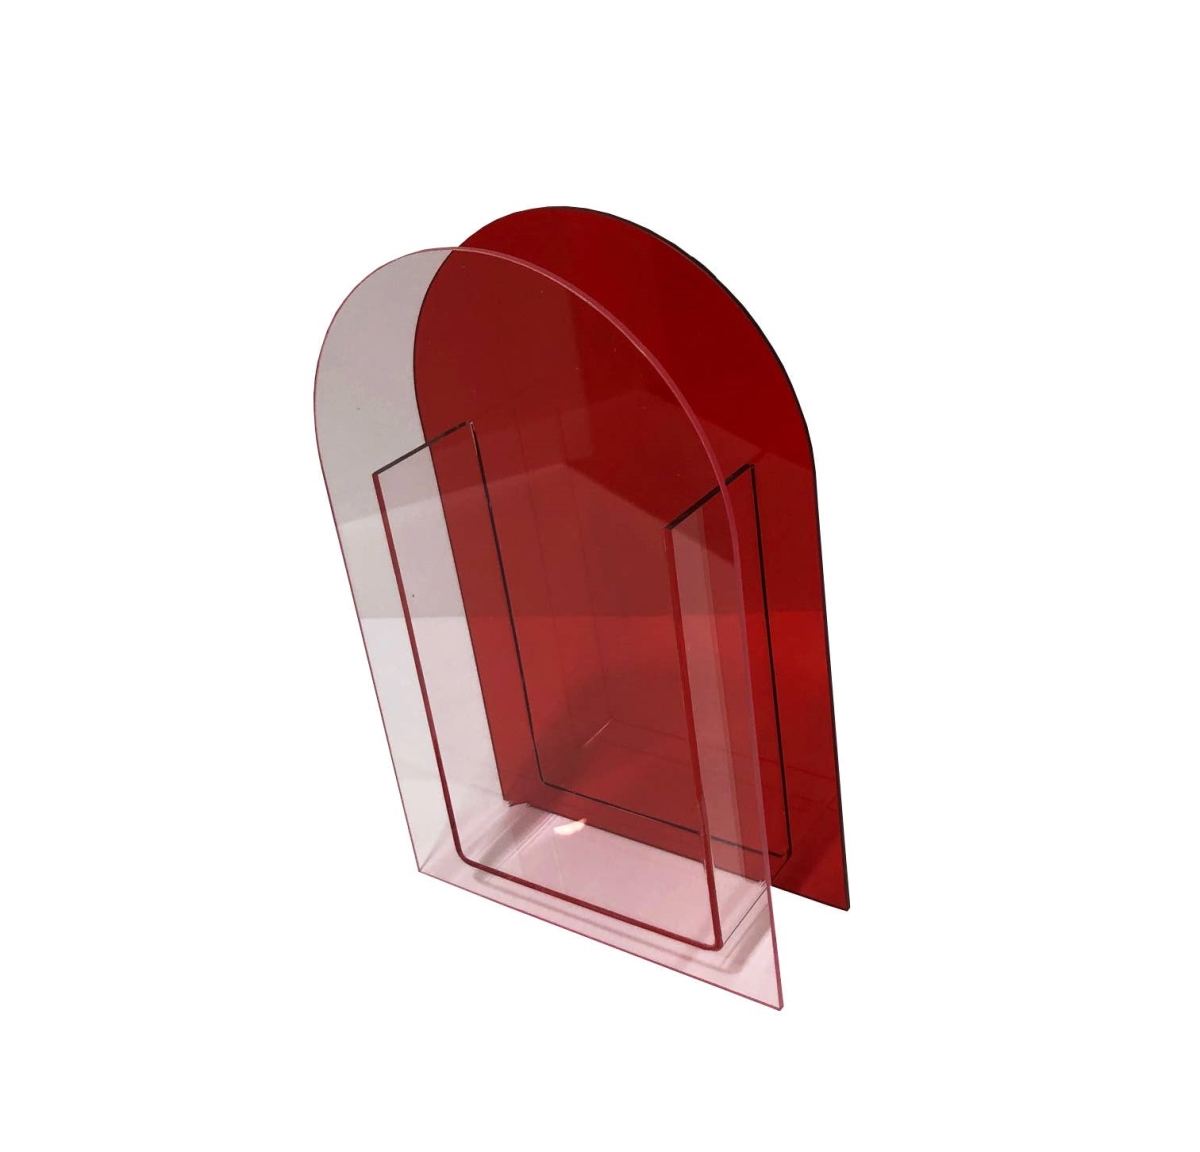 LV02-REDPNK Lucite Vase, Red & Light Pink -  R16 HOME